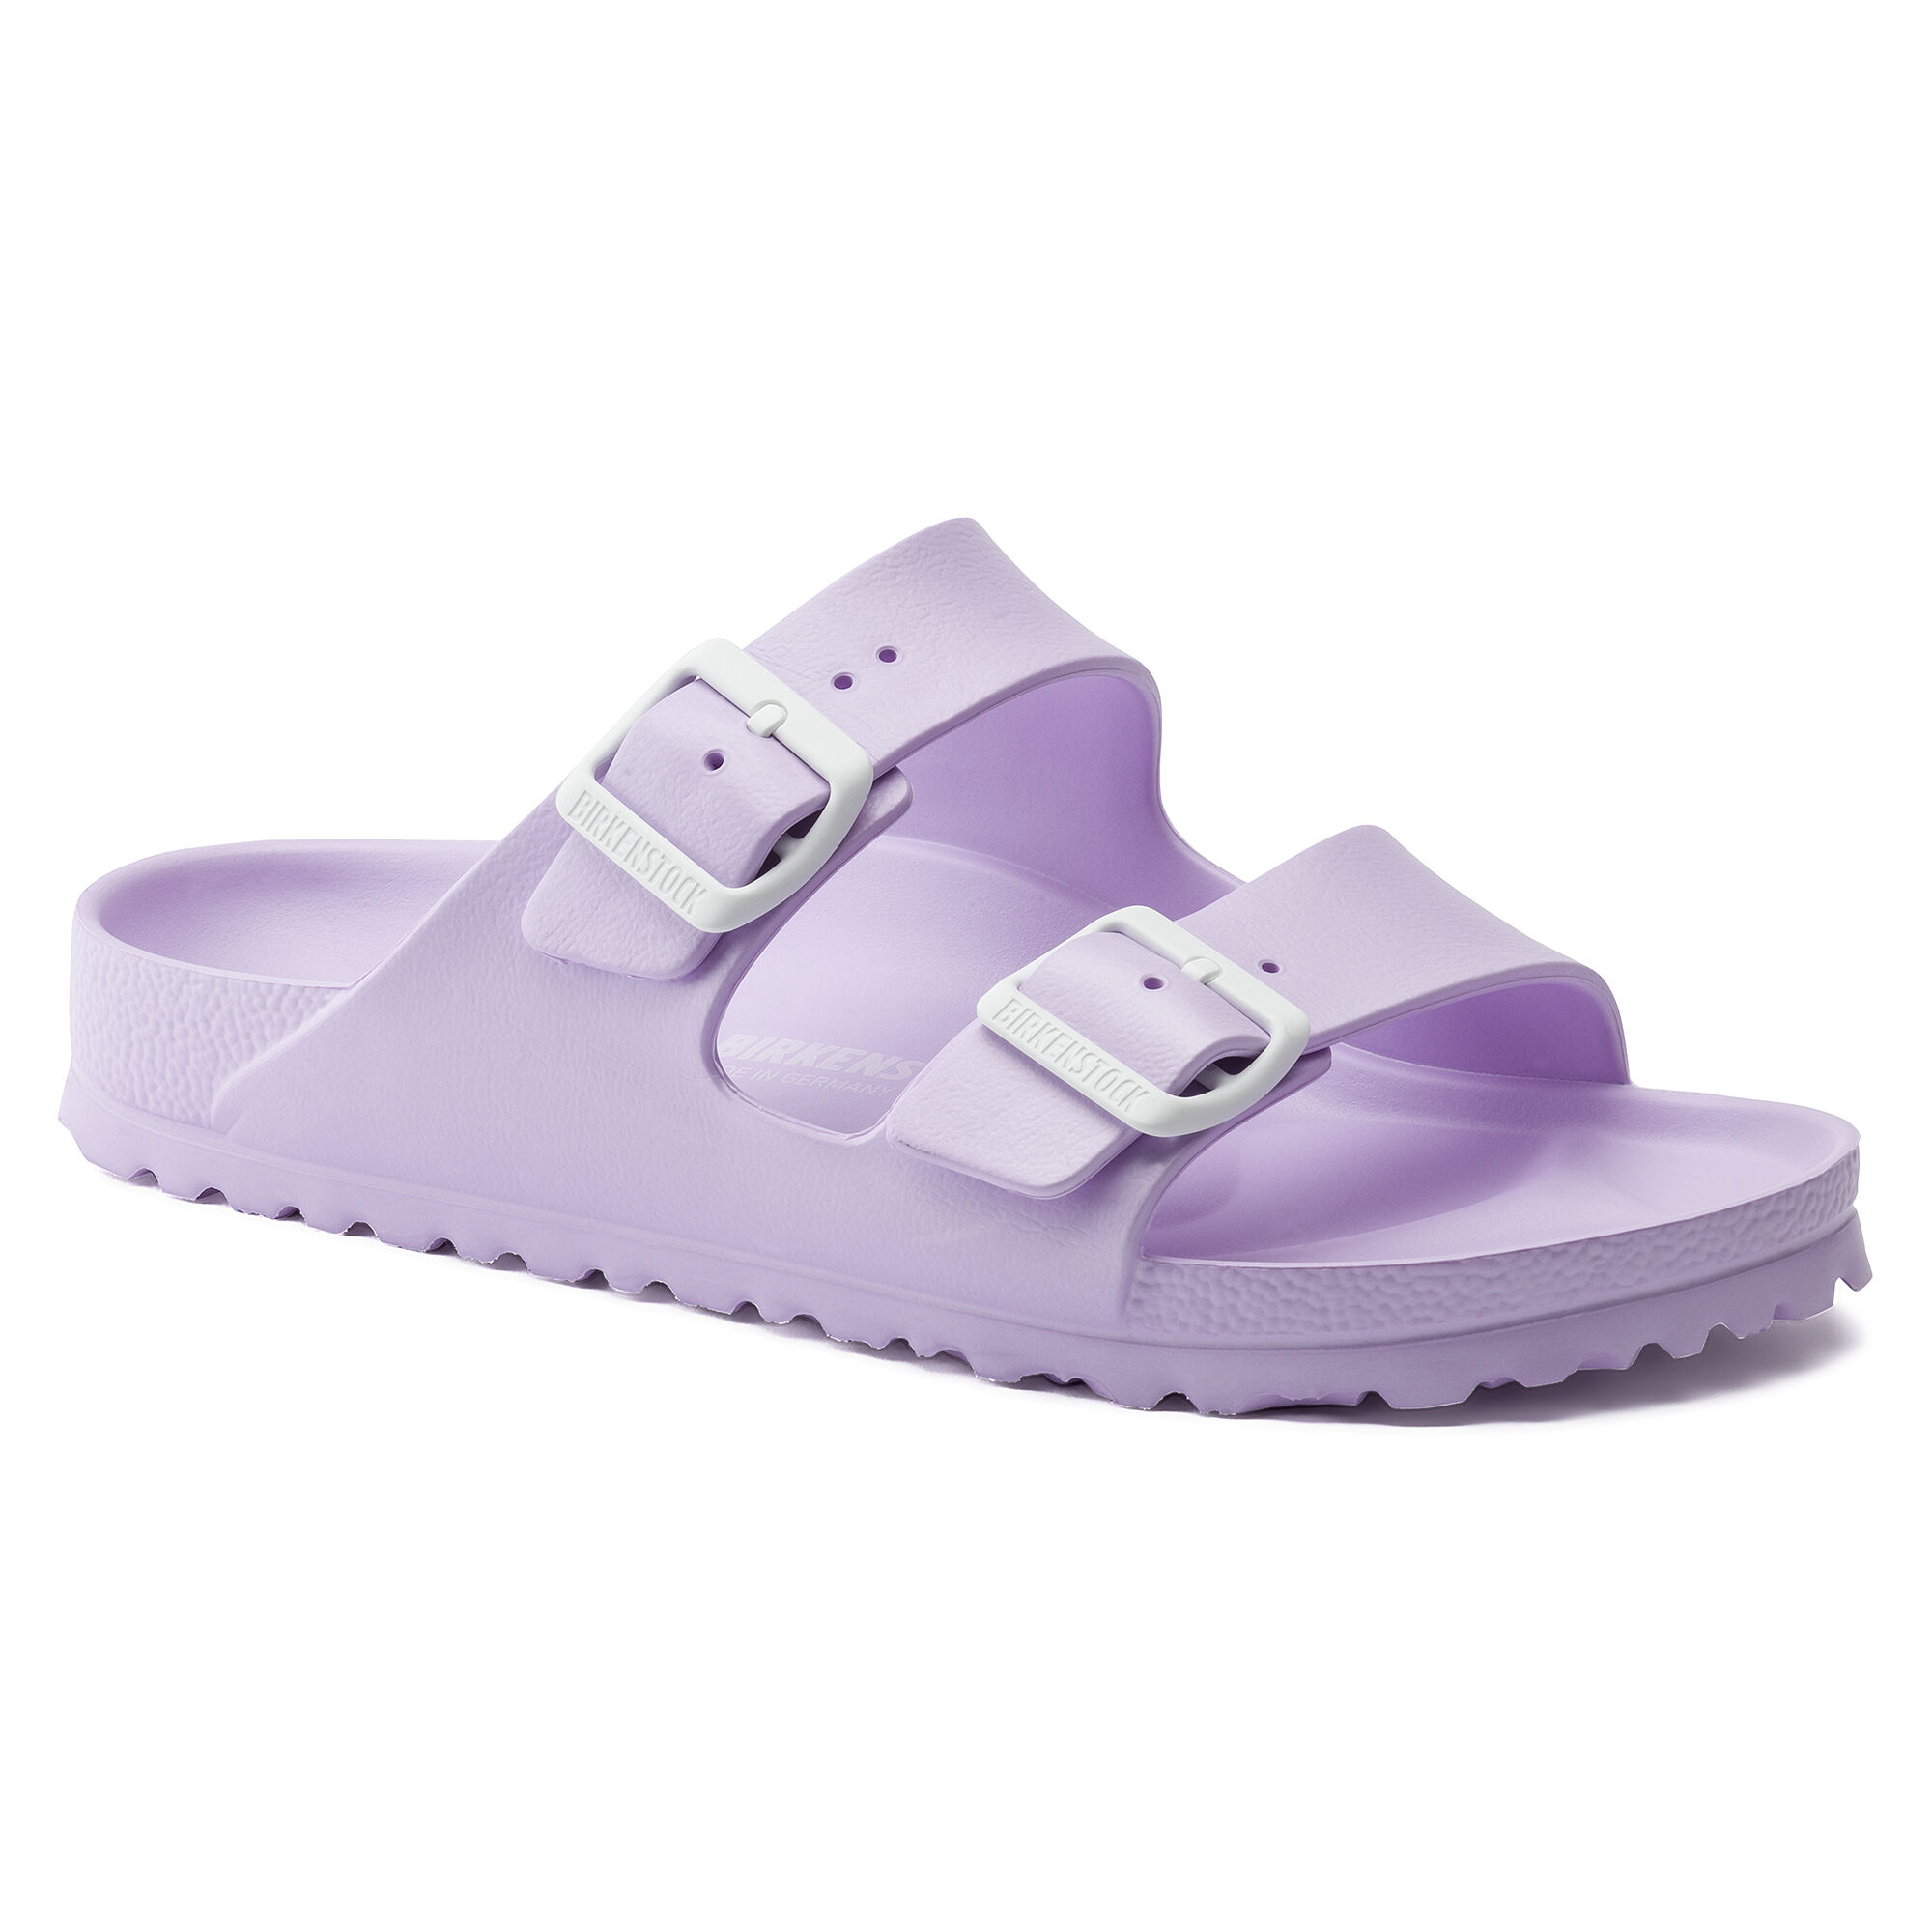 birkenstock women's arizona essentials eva sandals lavender